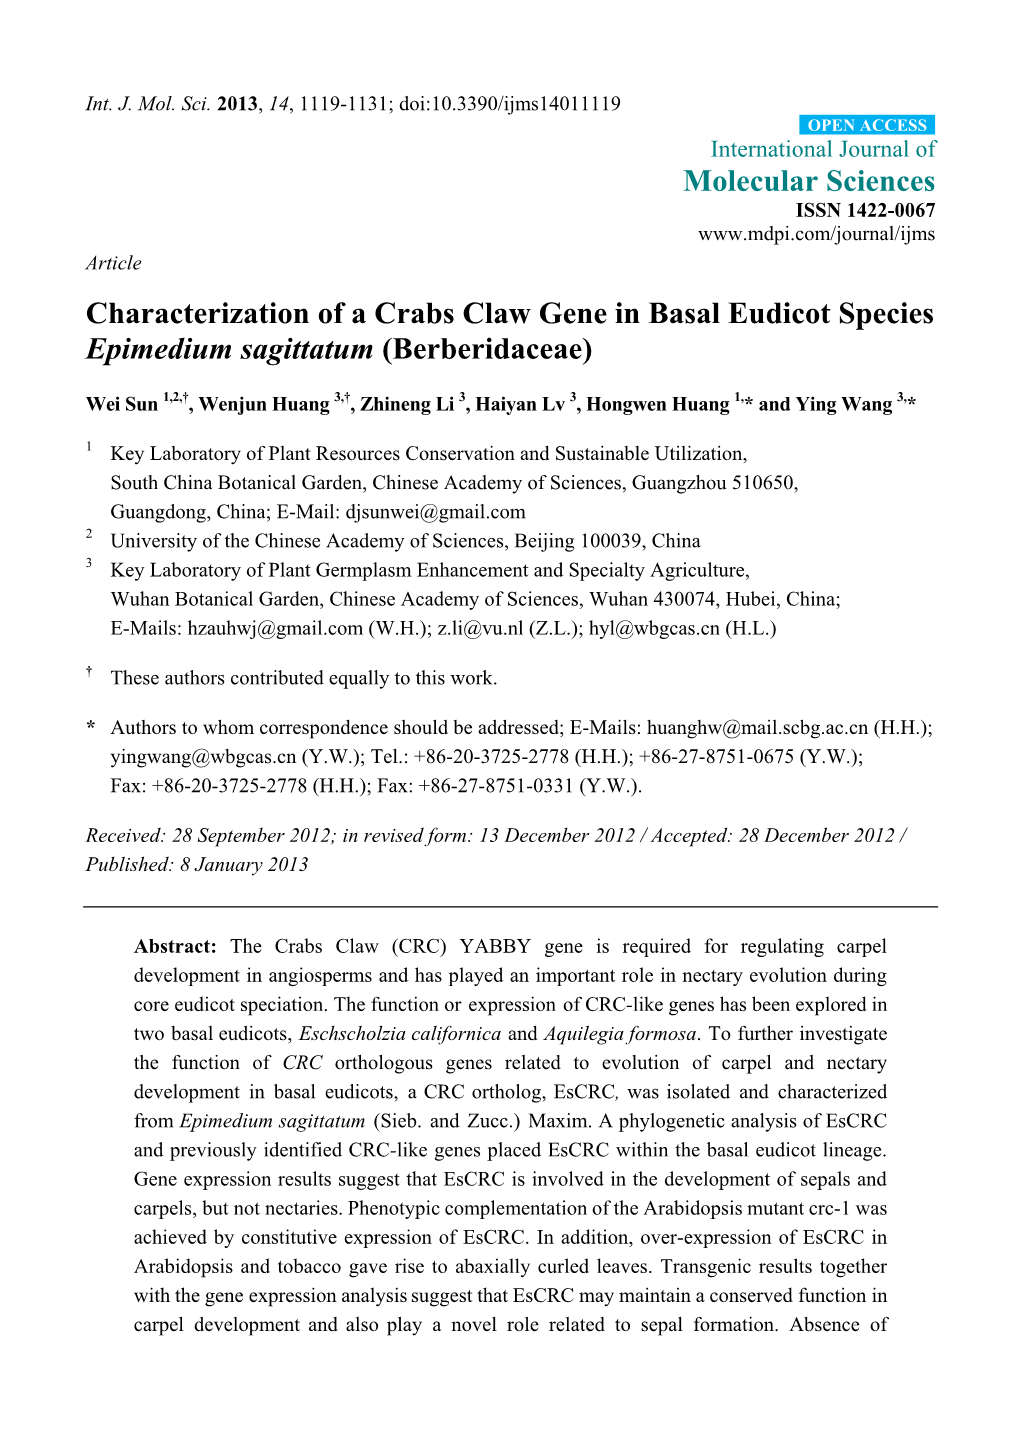 Characterization of a Crabs Claw Gene in Basal Eudicot Species Epimedium Sagittatum (Berberidaceae)